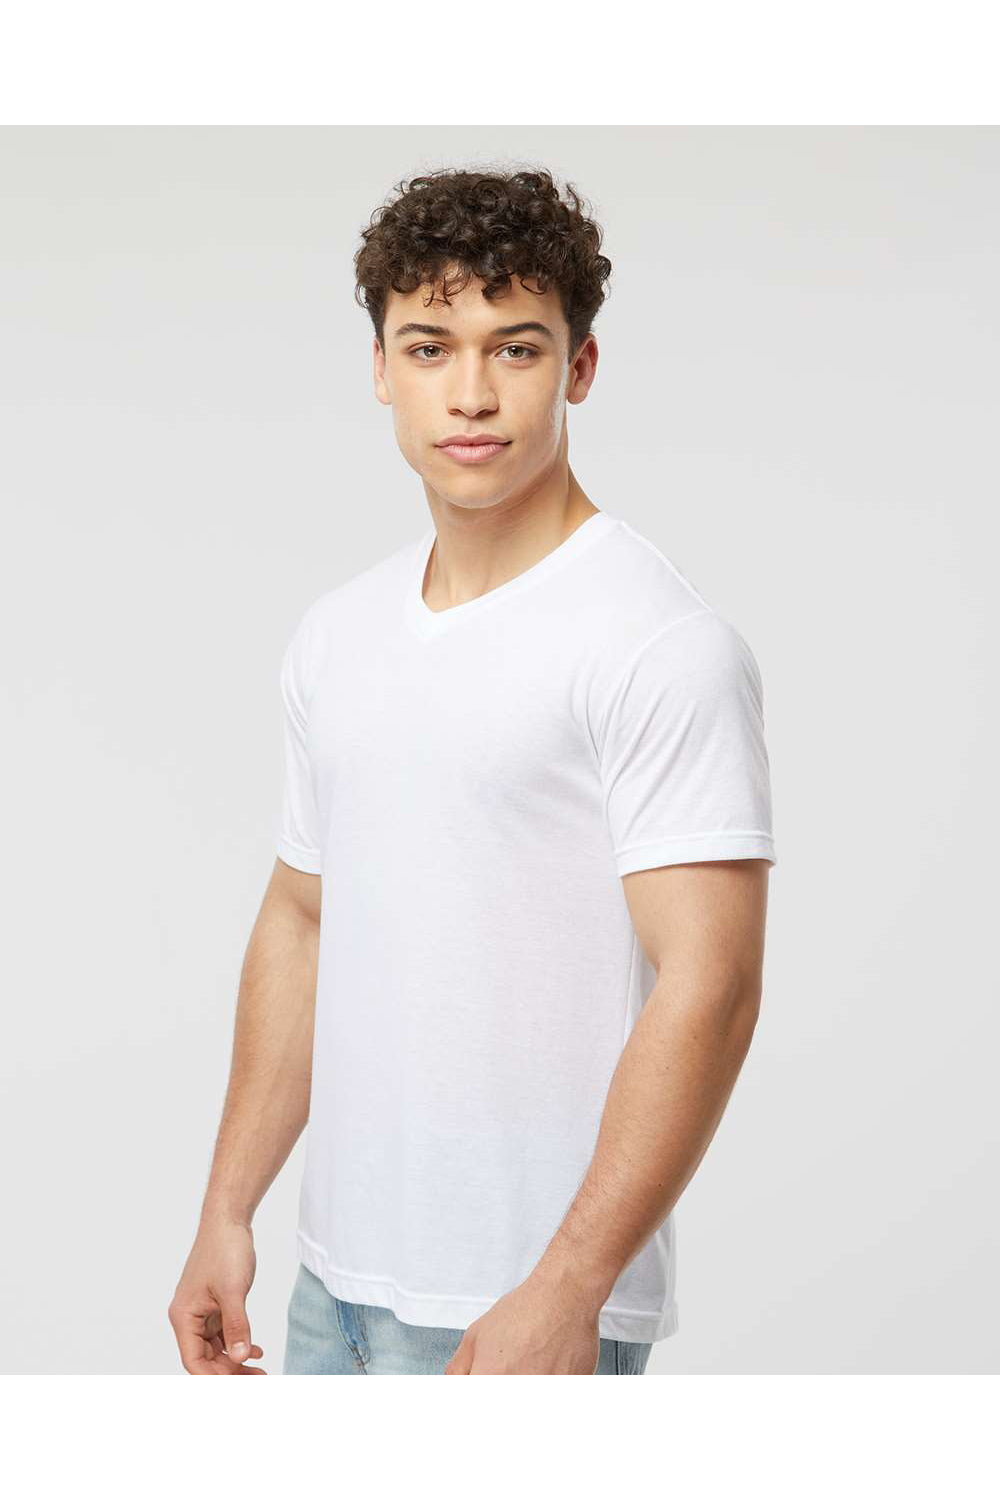 Tultex 207 Mens Poly-Rich Short Sleeve V-Neck T-Shirt White Model Side